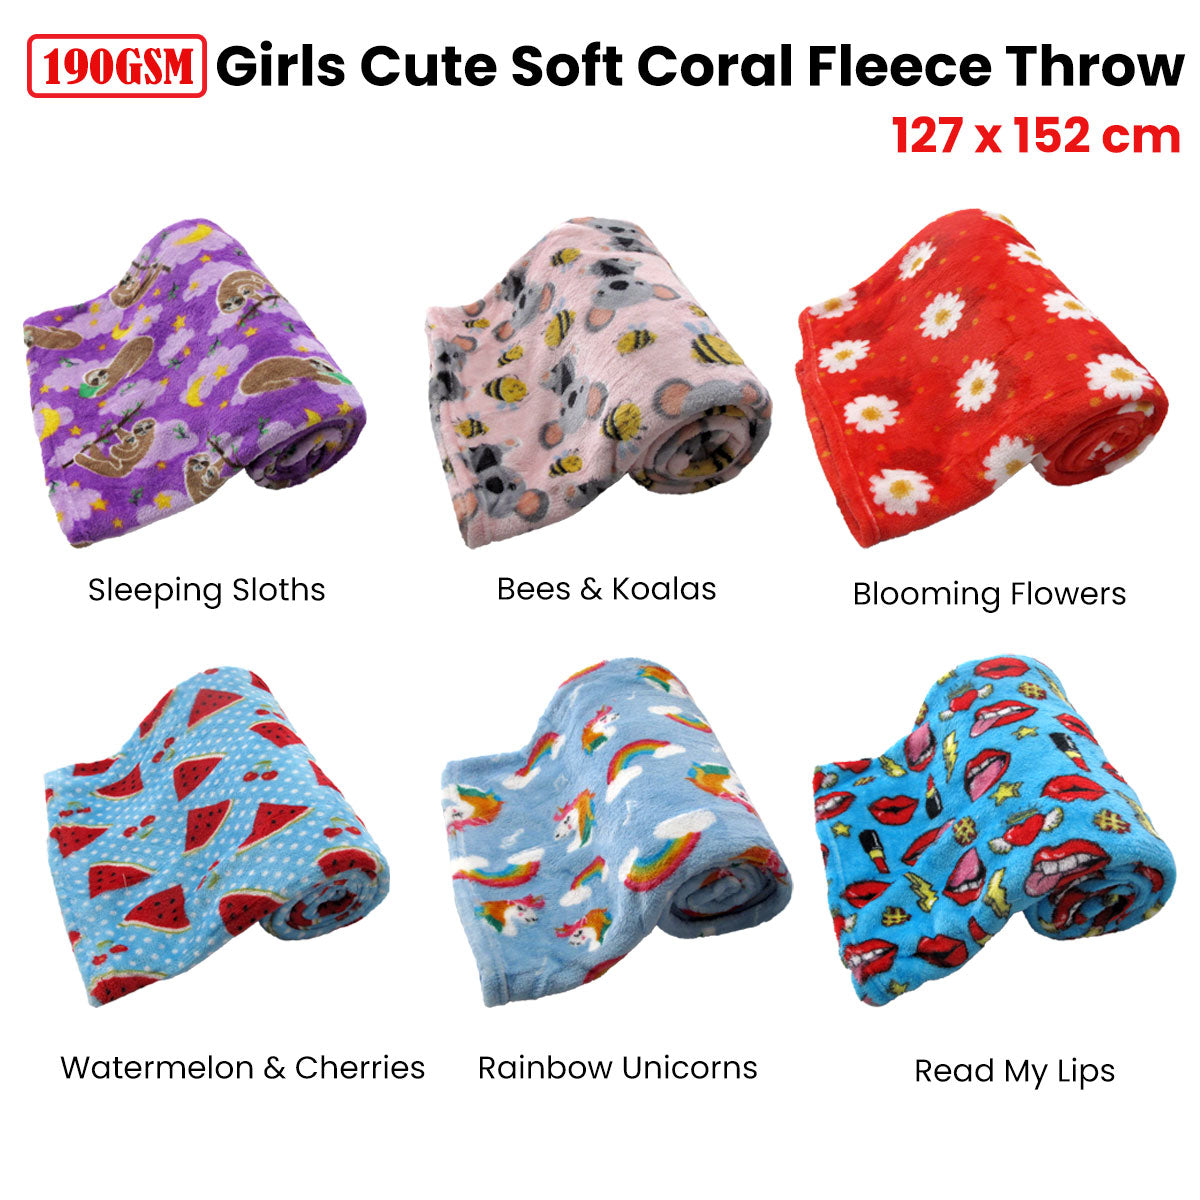 190GSM Girls Cute Ultra Soft Coral Fleece Throw 127 x 152cm Watermelon & Cherries